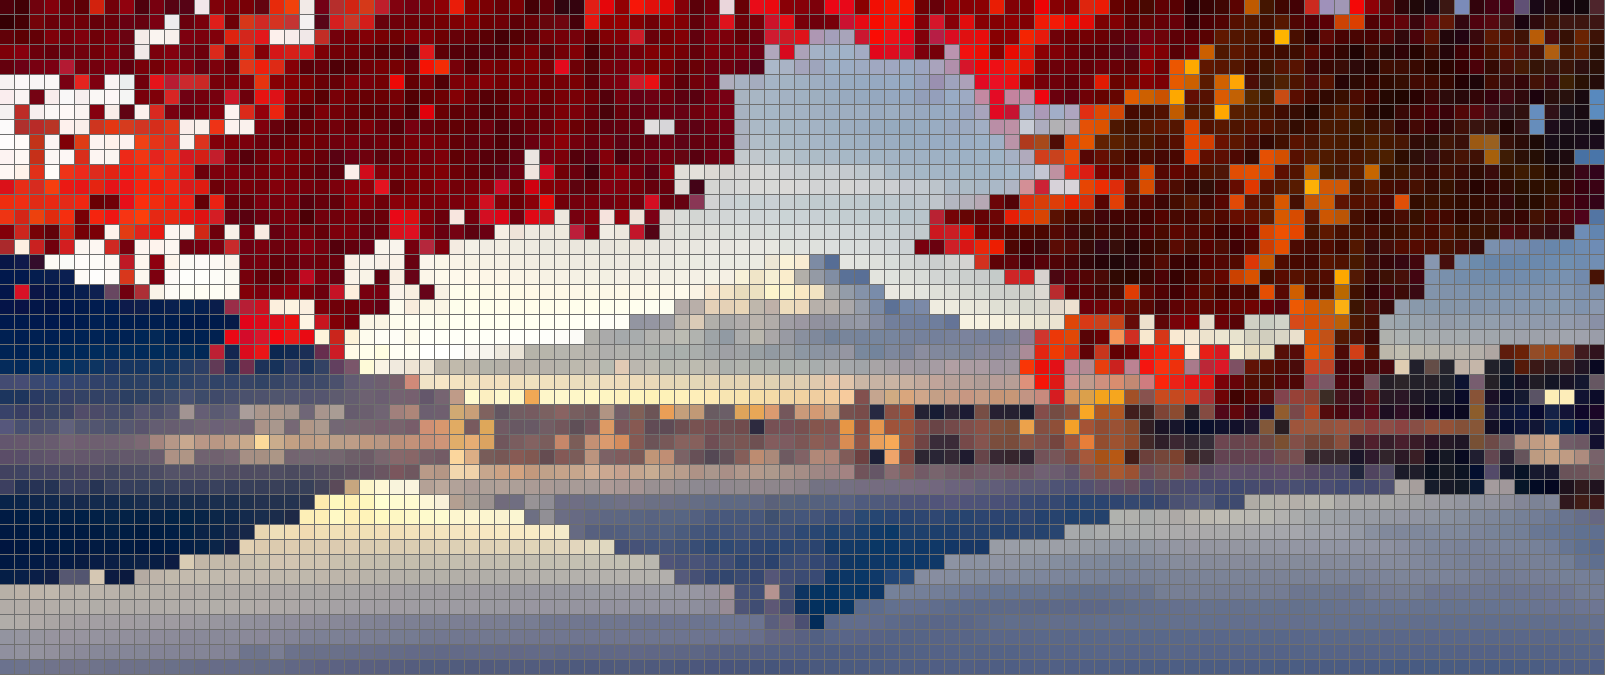 Japan Mount Fuji 8bit pixel style